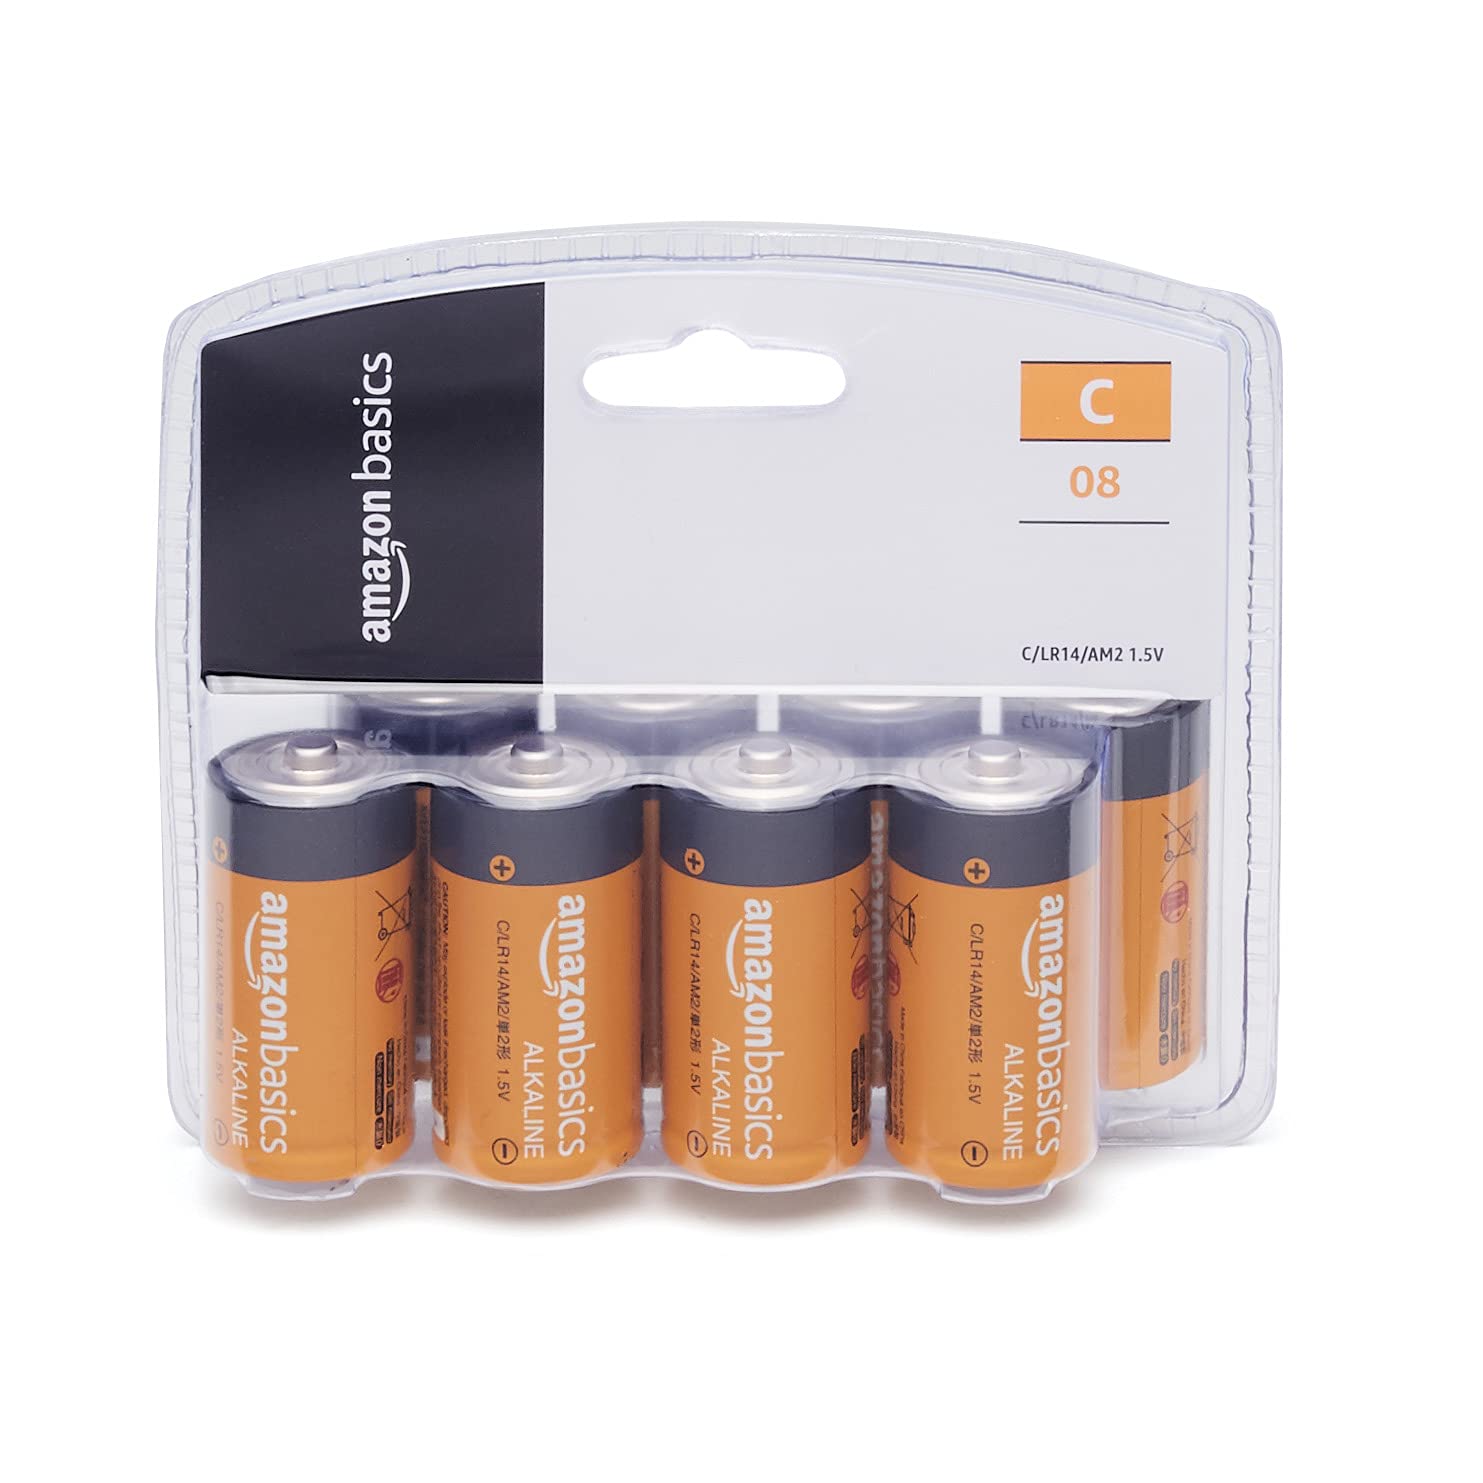 Amazon Basics 8-Pack C Cell Alkaline All-Purpose Batteries, 1.5 Volt, 5-Year Shelf Life